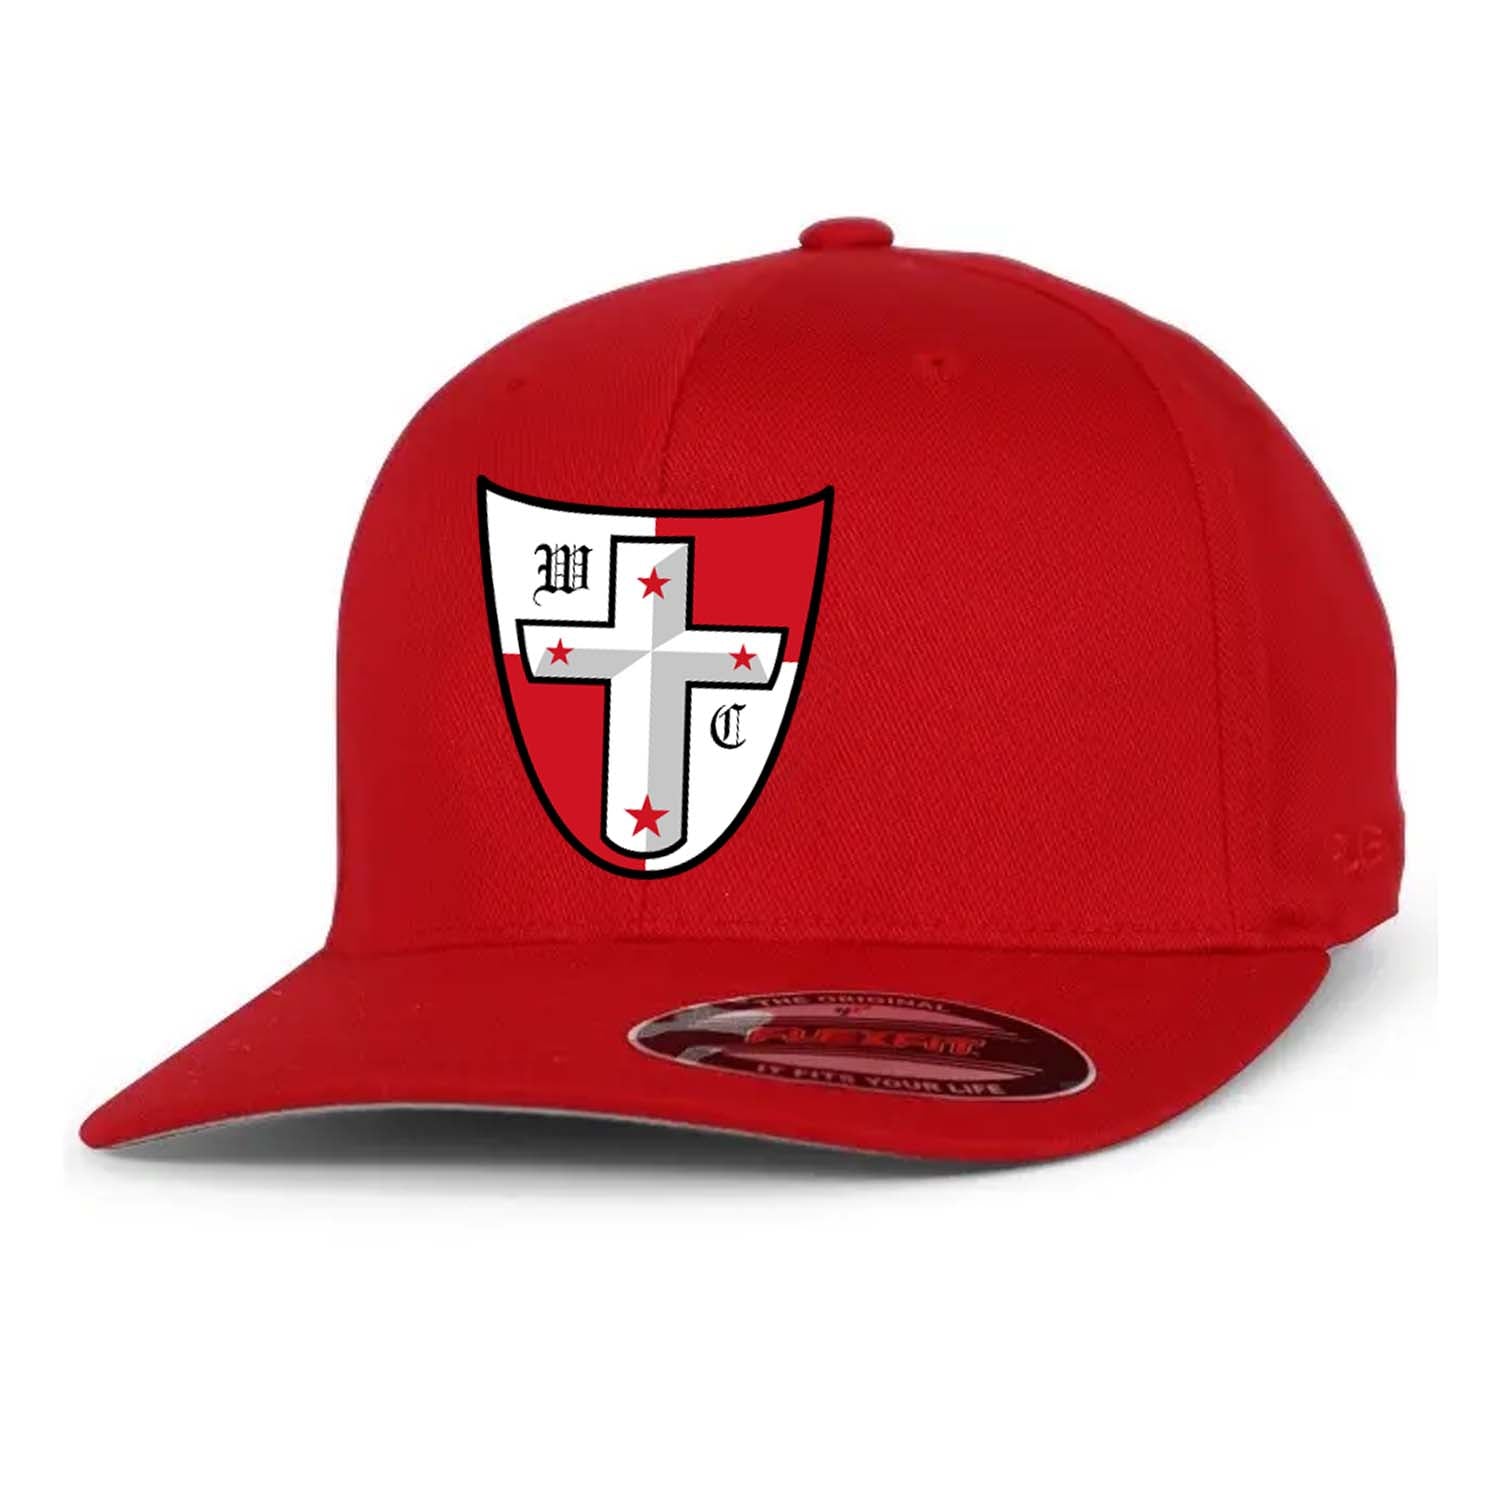 Crusaders trucker cap Red flex fit